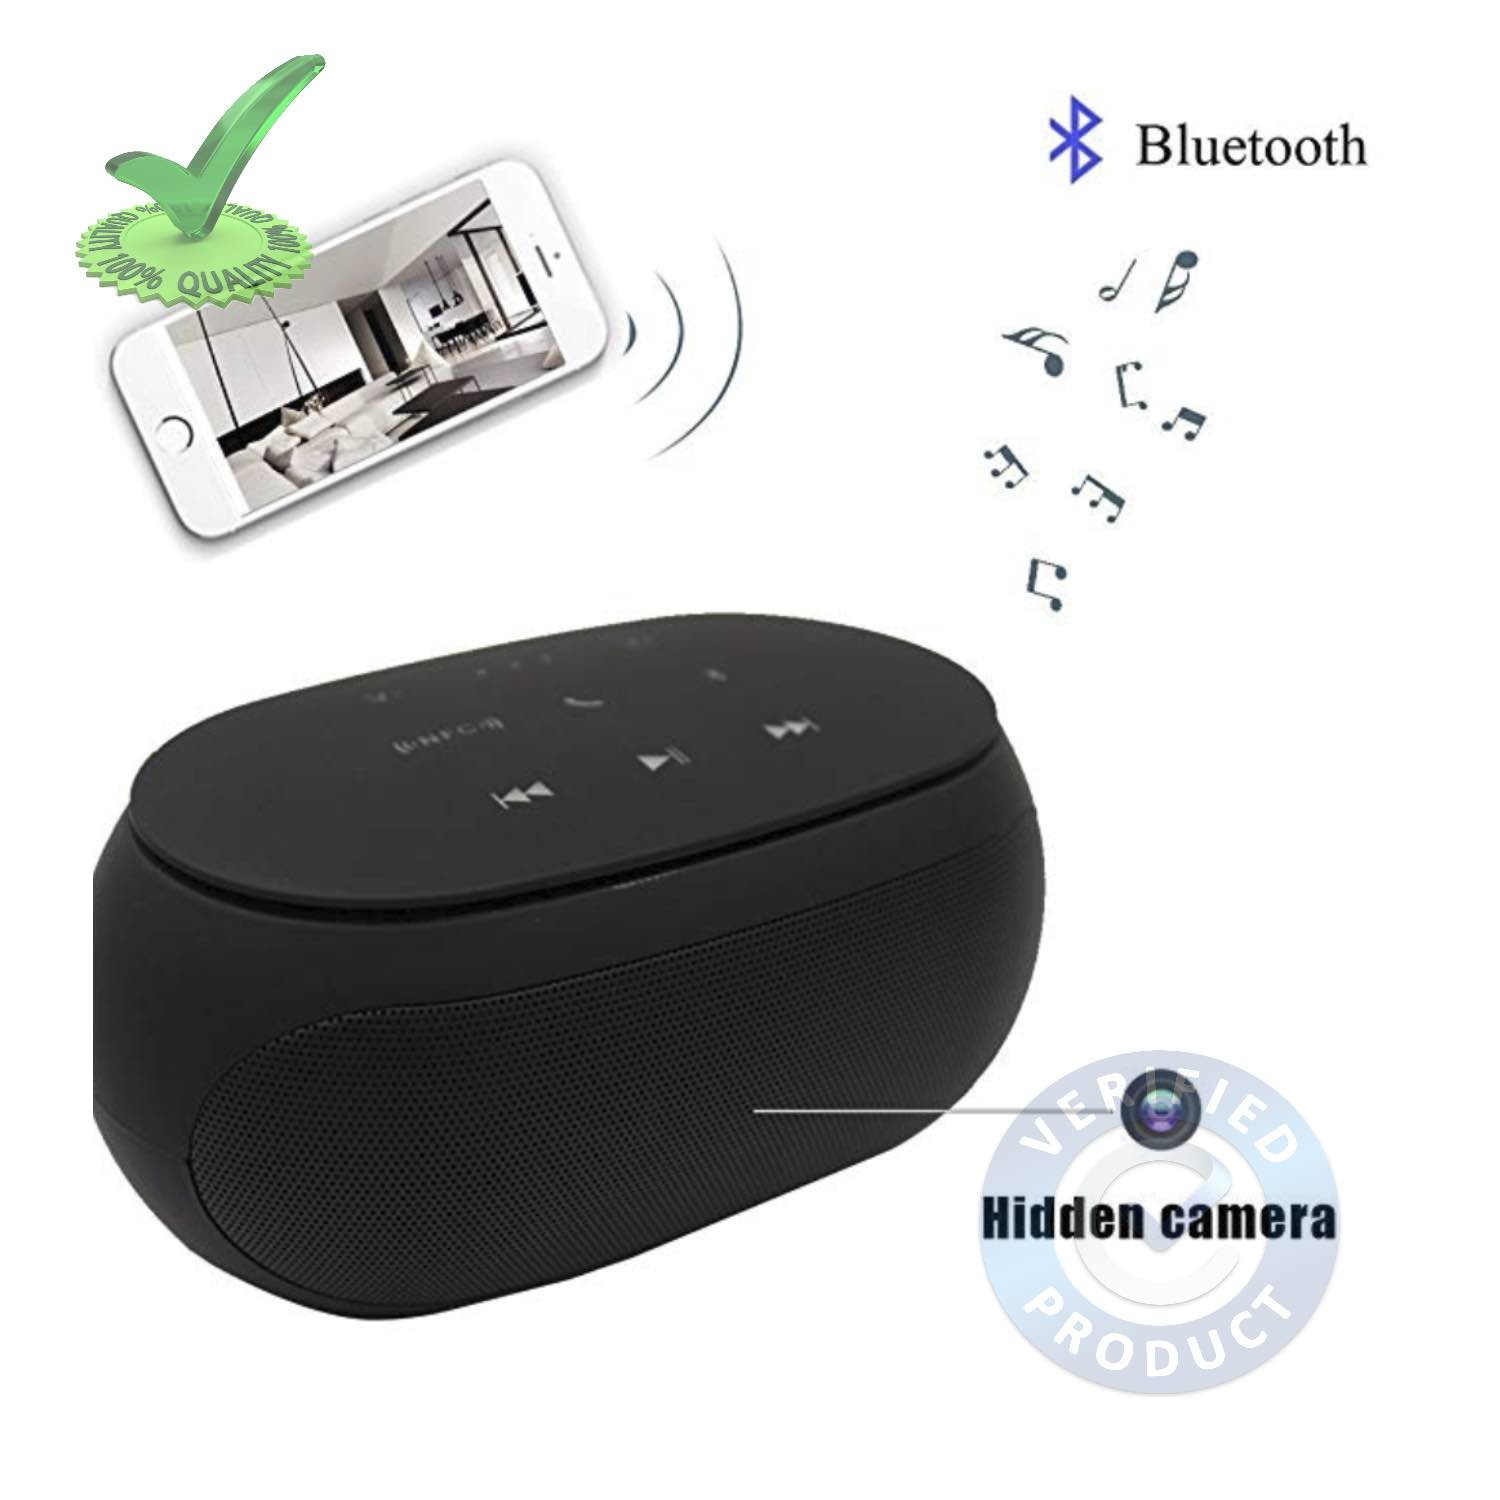 4k WiFi Spy Hidden Camera with Recorder in Bluetooth Speaker